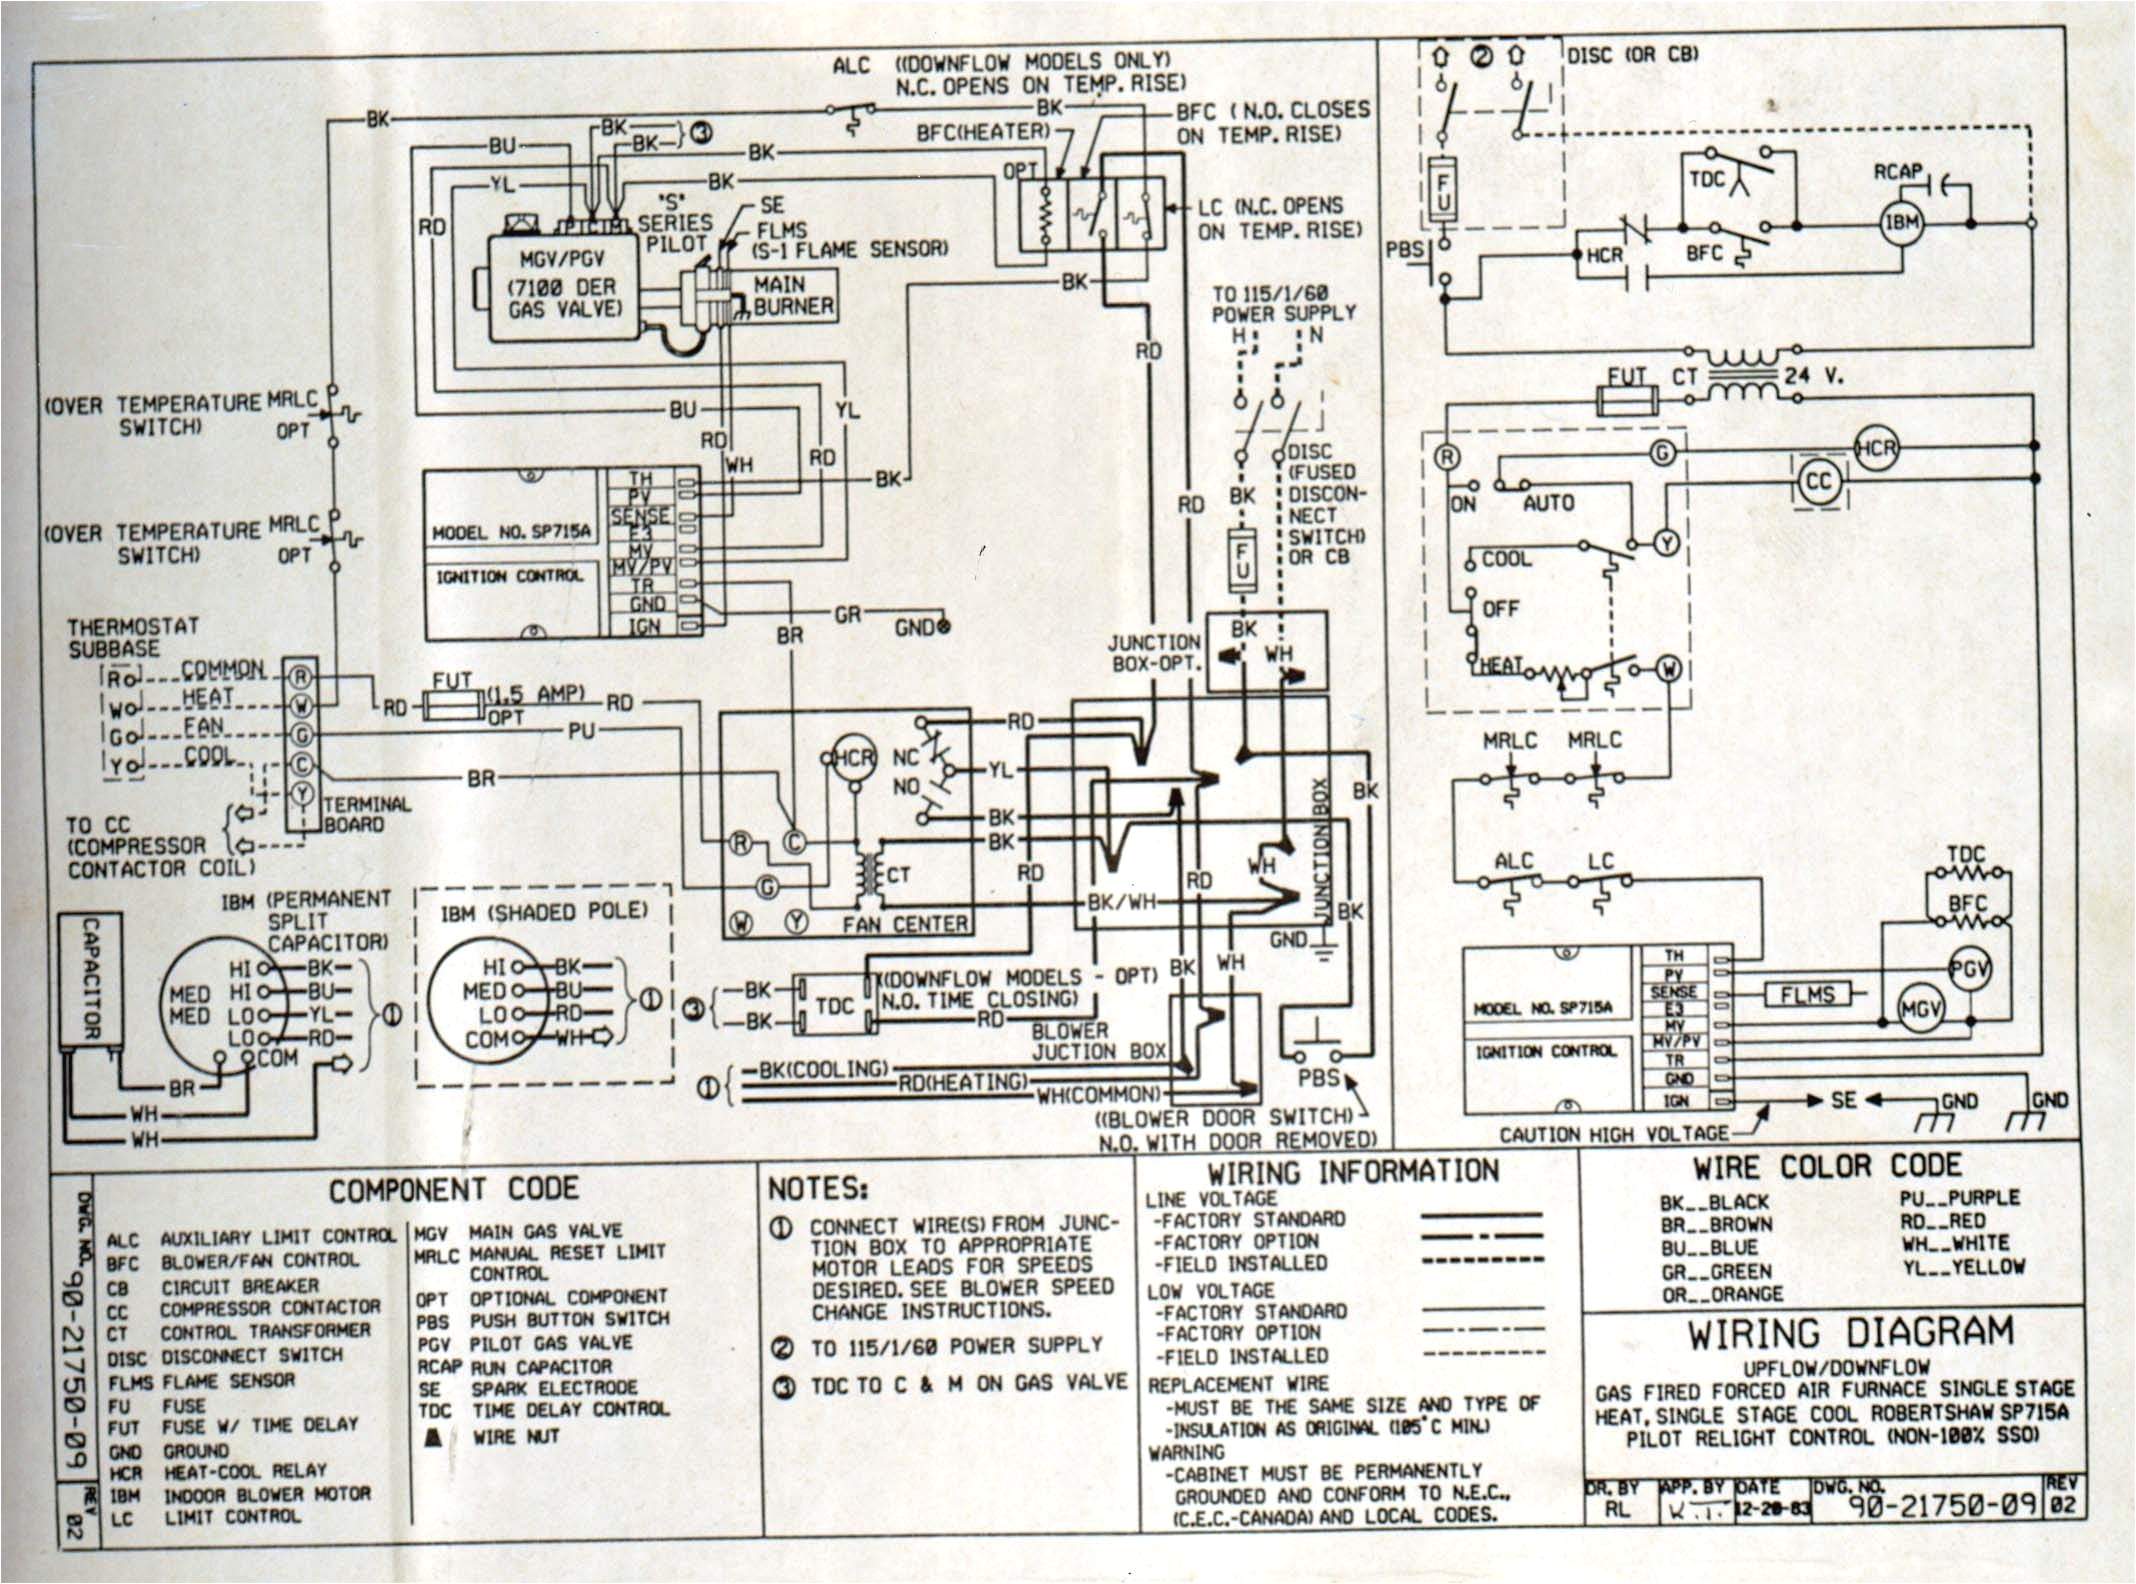 lennox furnace light codes trane gas furnace wiring diagram wiring library of lennox furnace light codes jpg